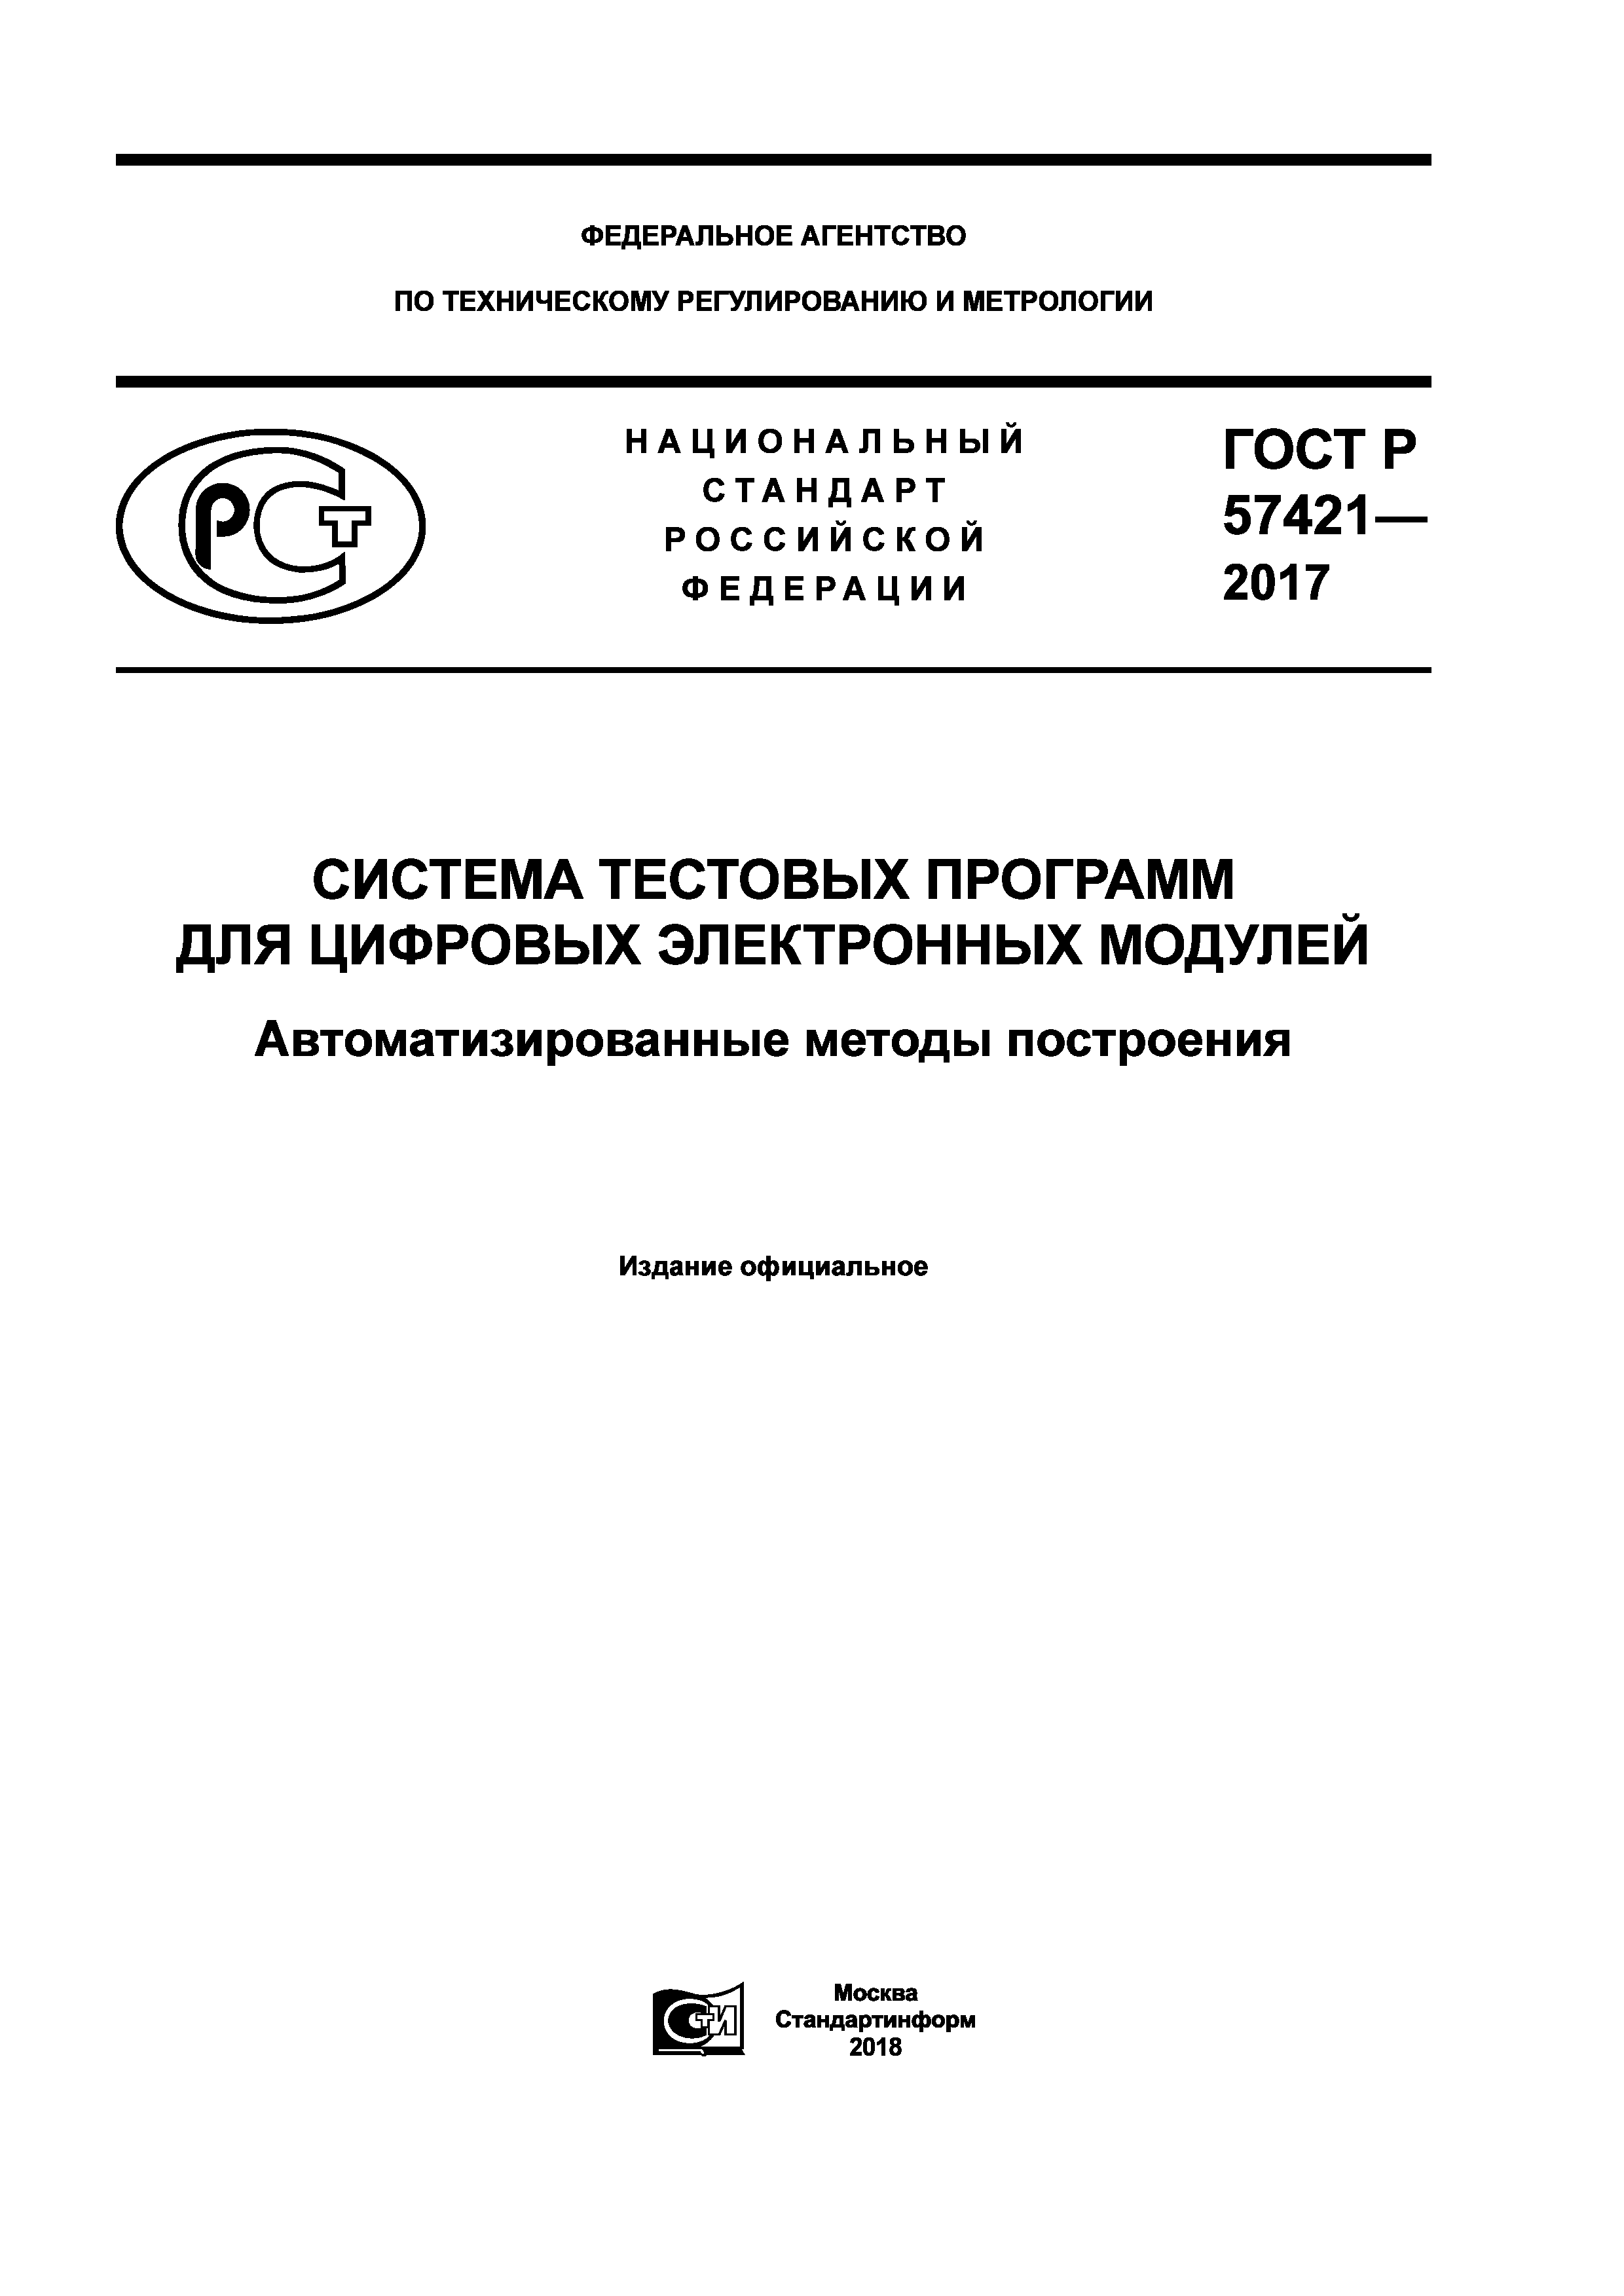 ГОСТ Р 57421-2017